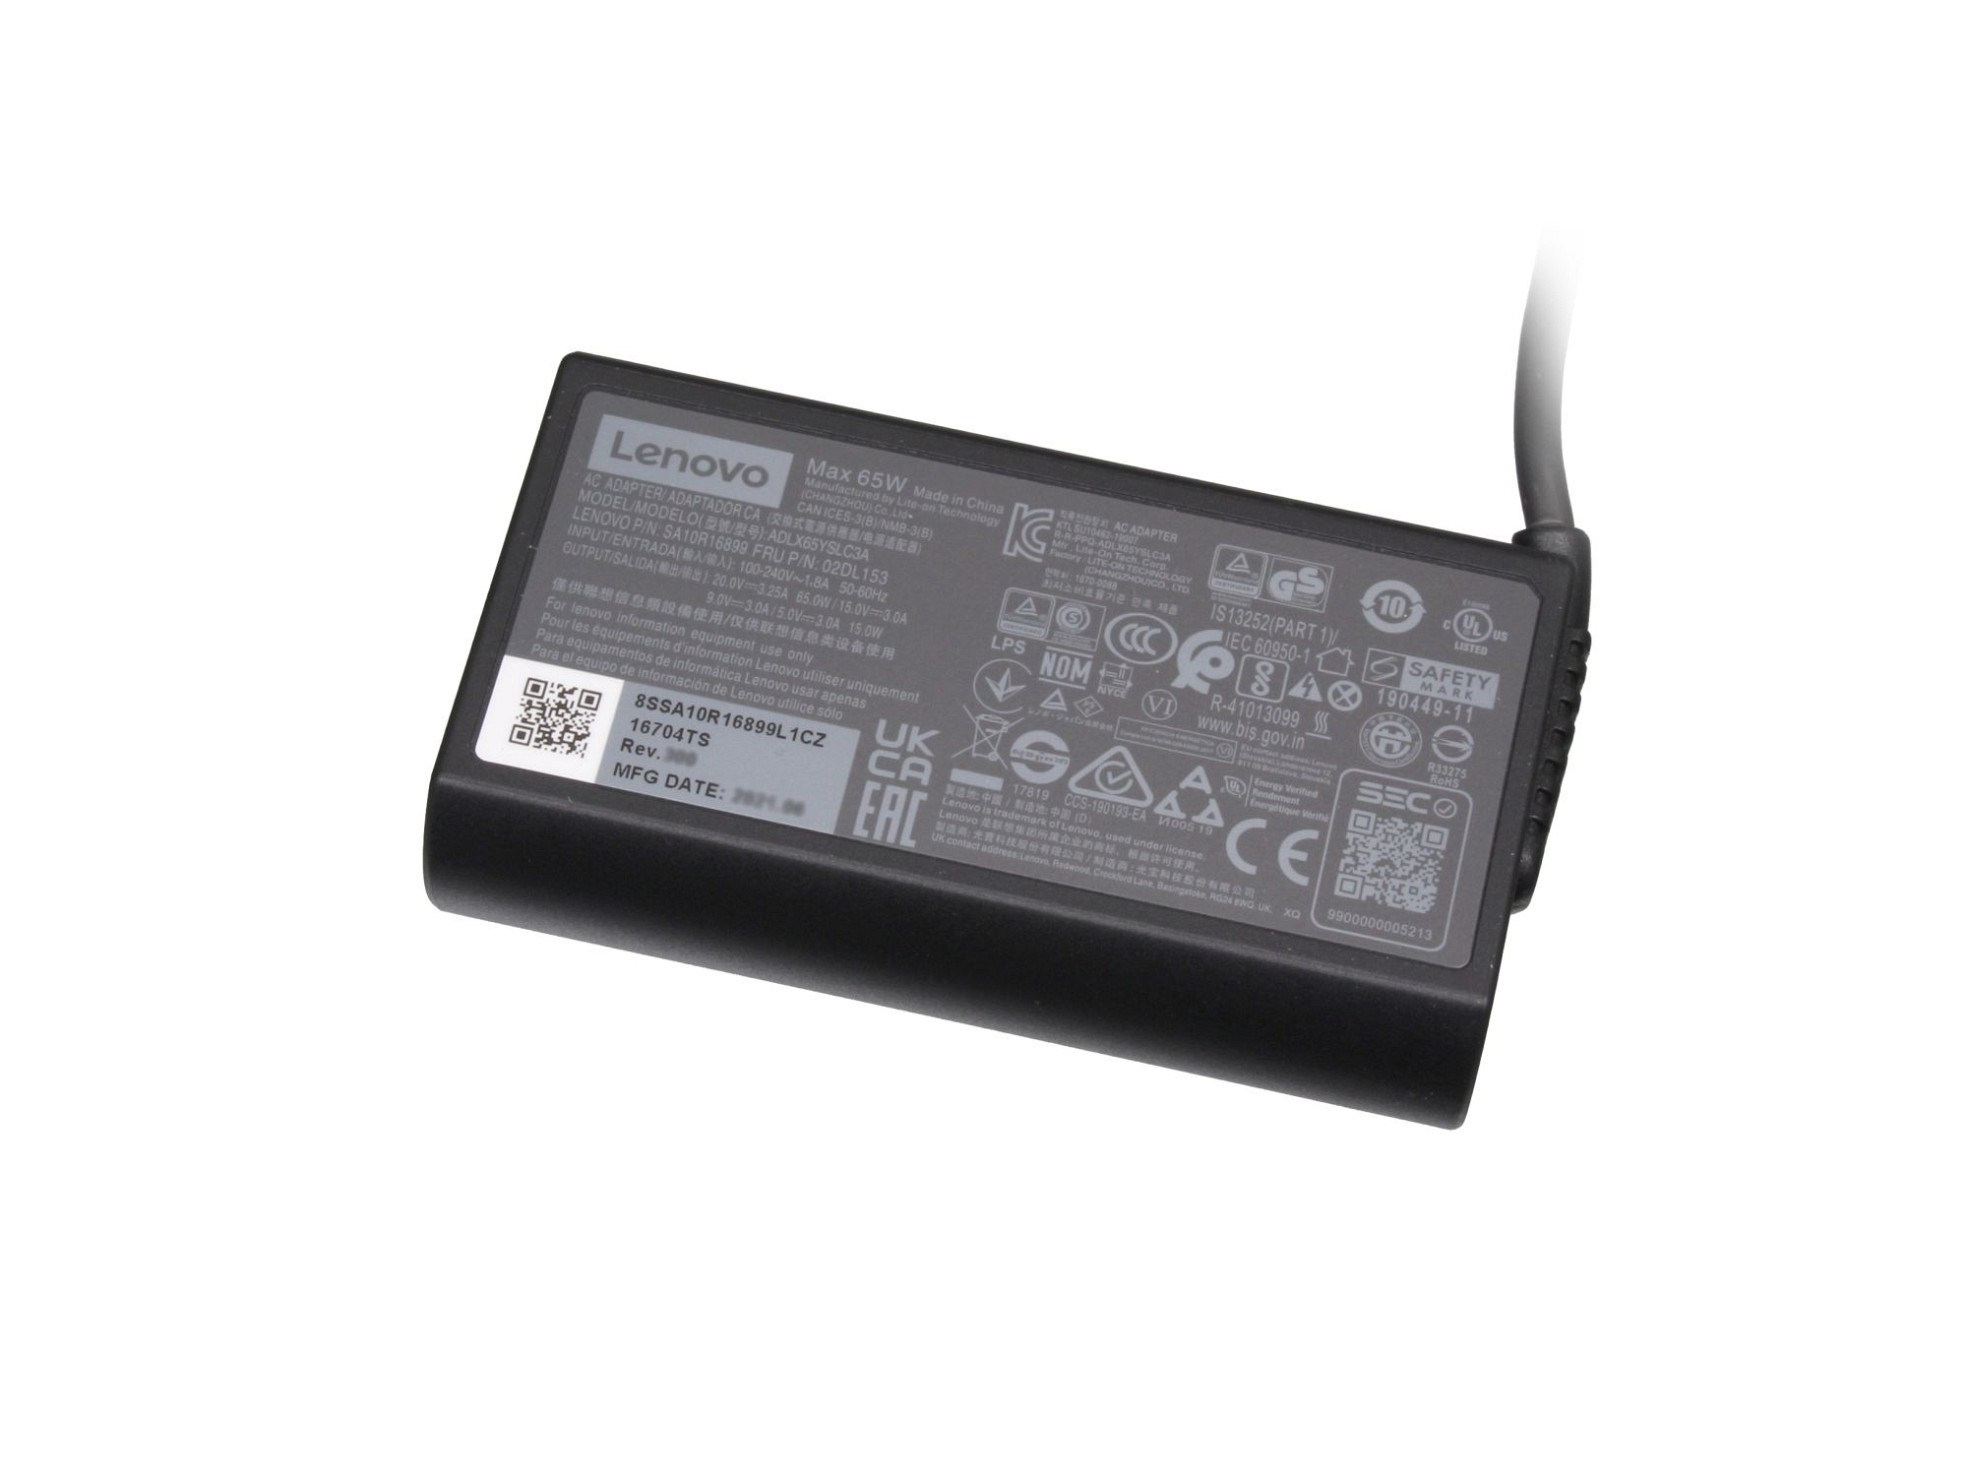 USB-C 02DL156 65 LENOVO abgerundetes Original Watt Netzteil